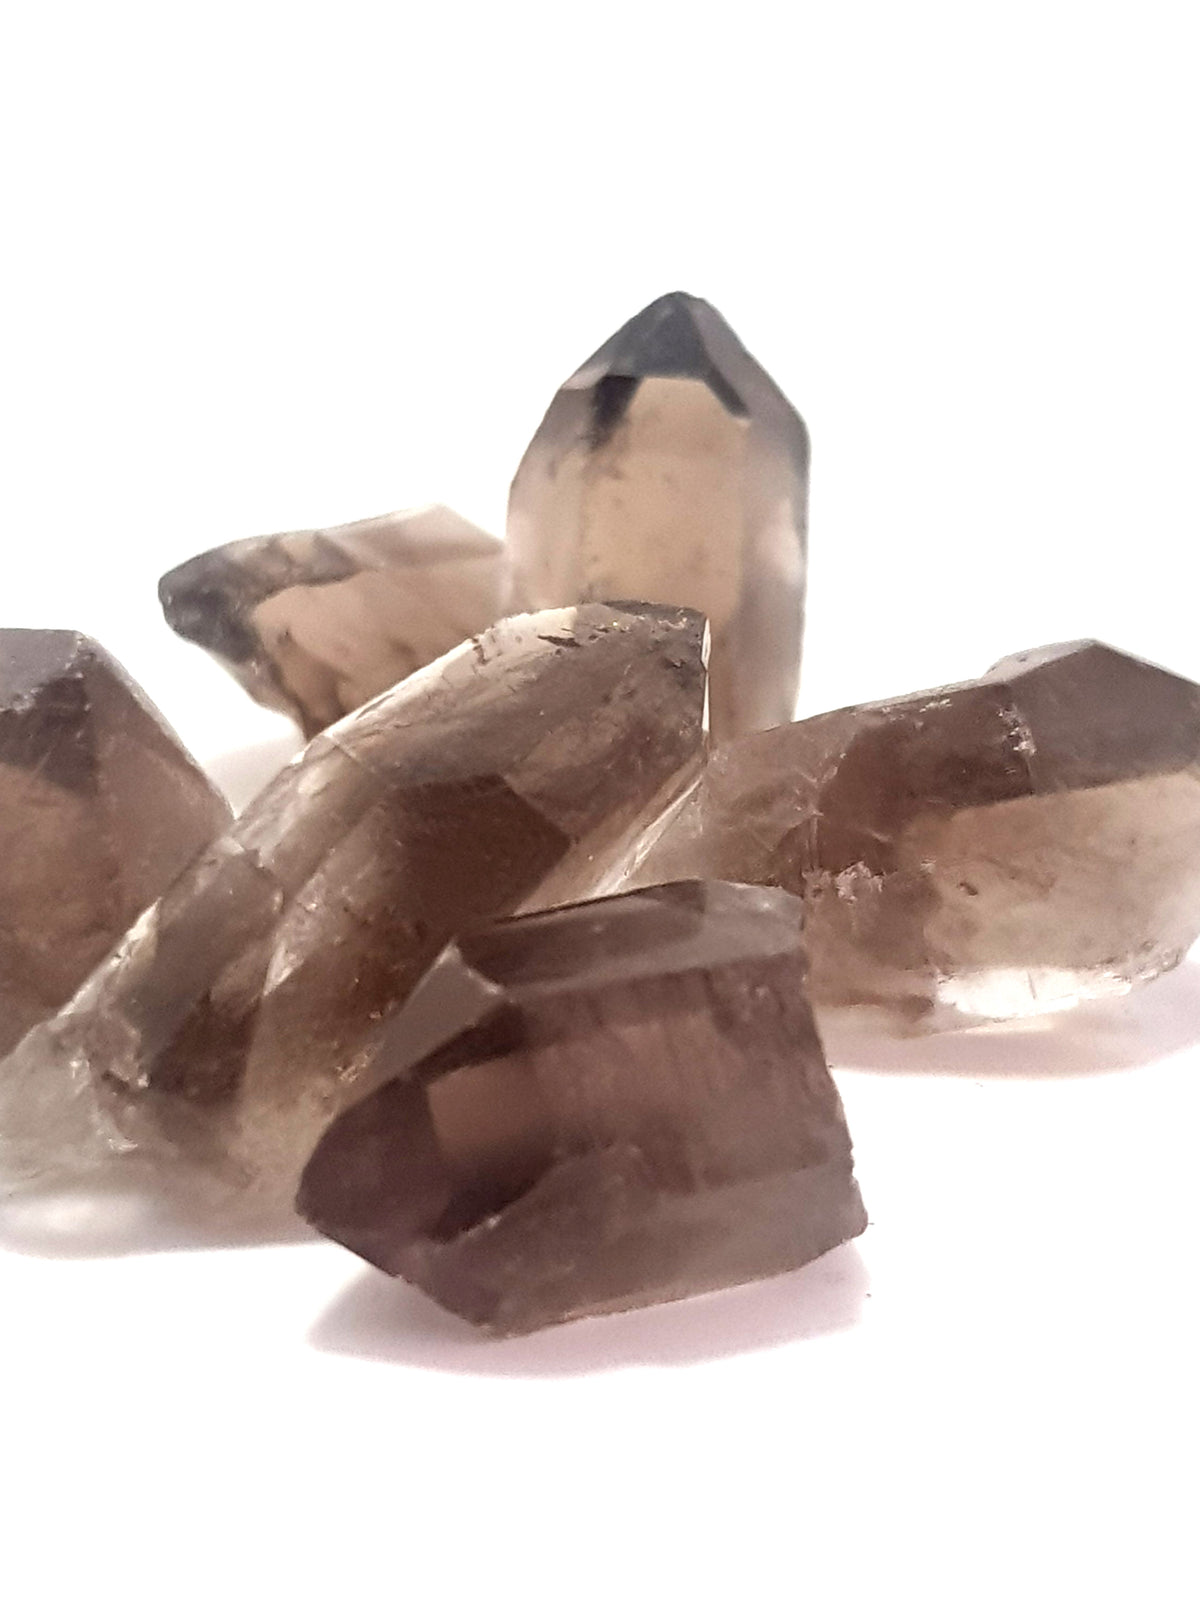 six natural small smoky quartz crystals. medium to dark in colour.